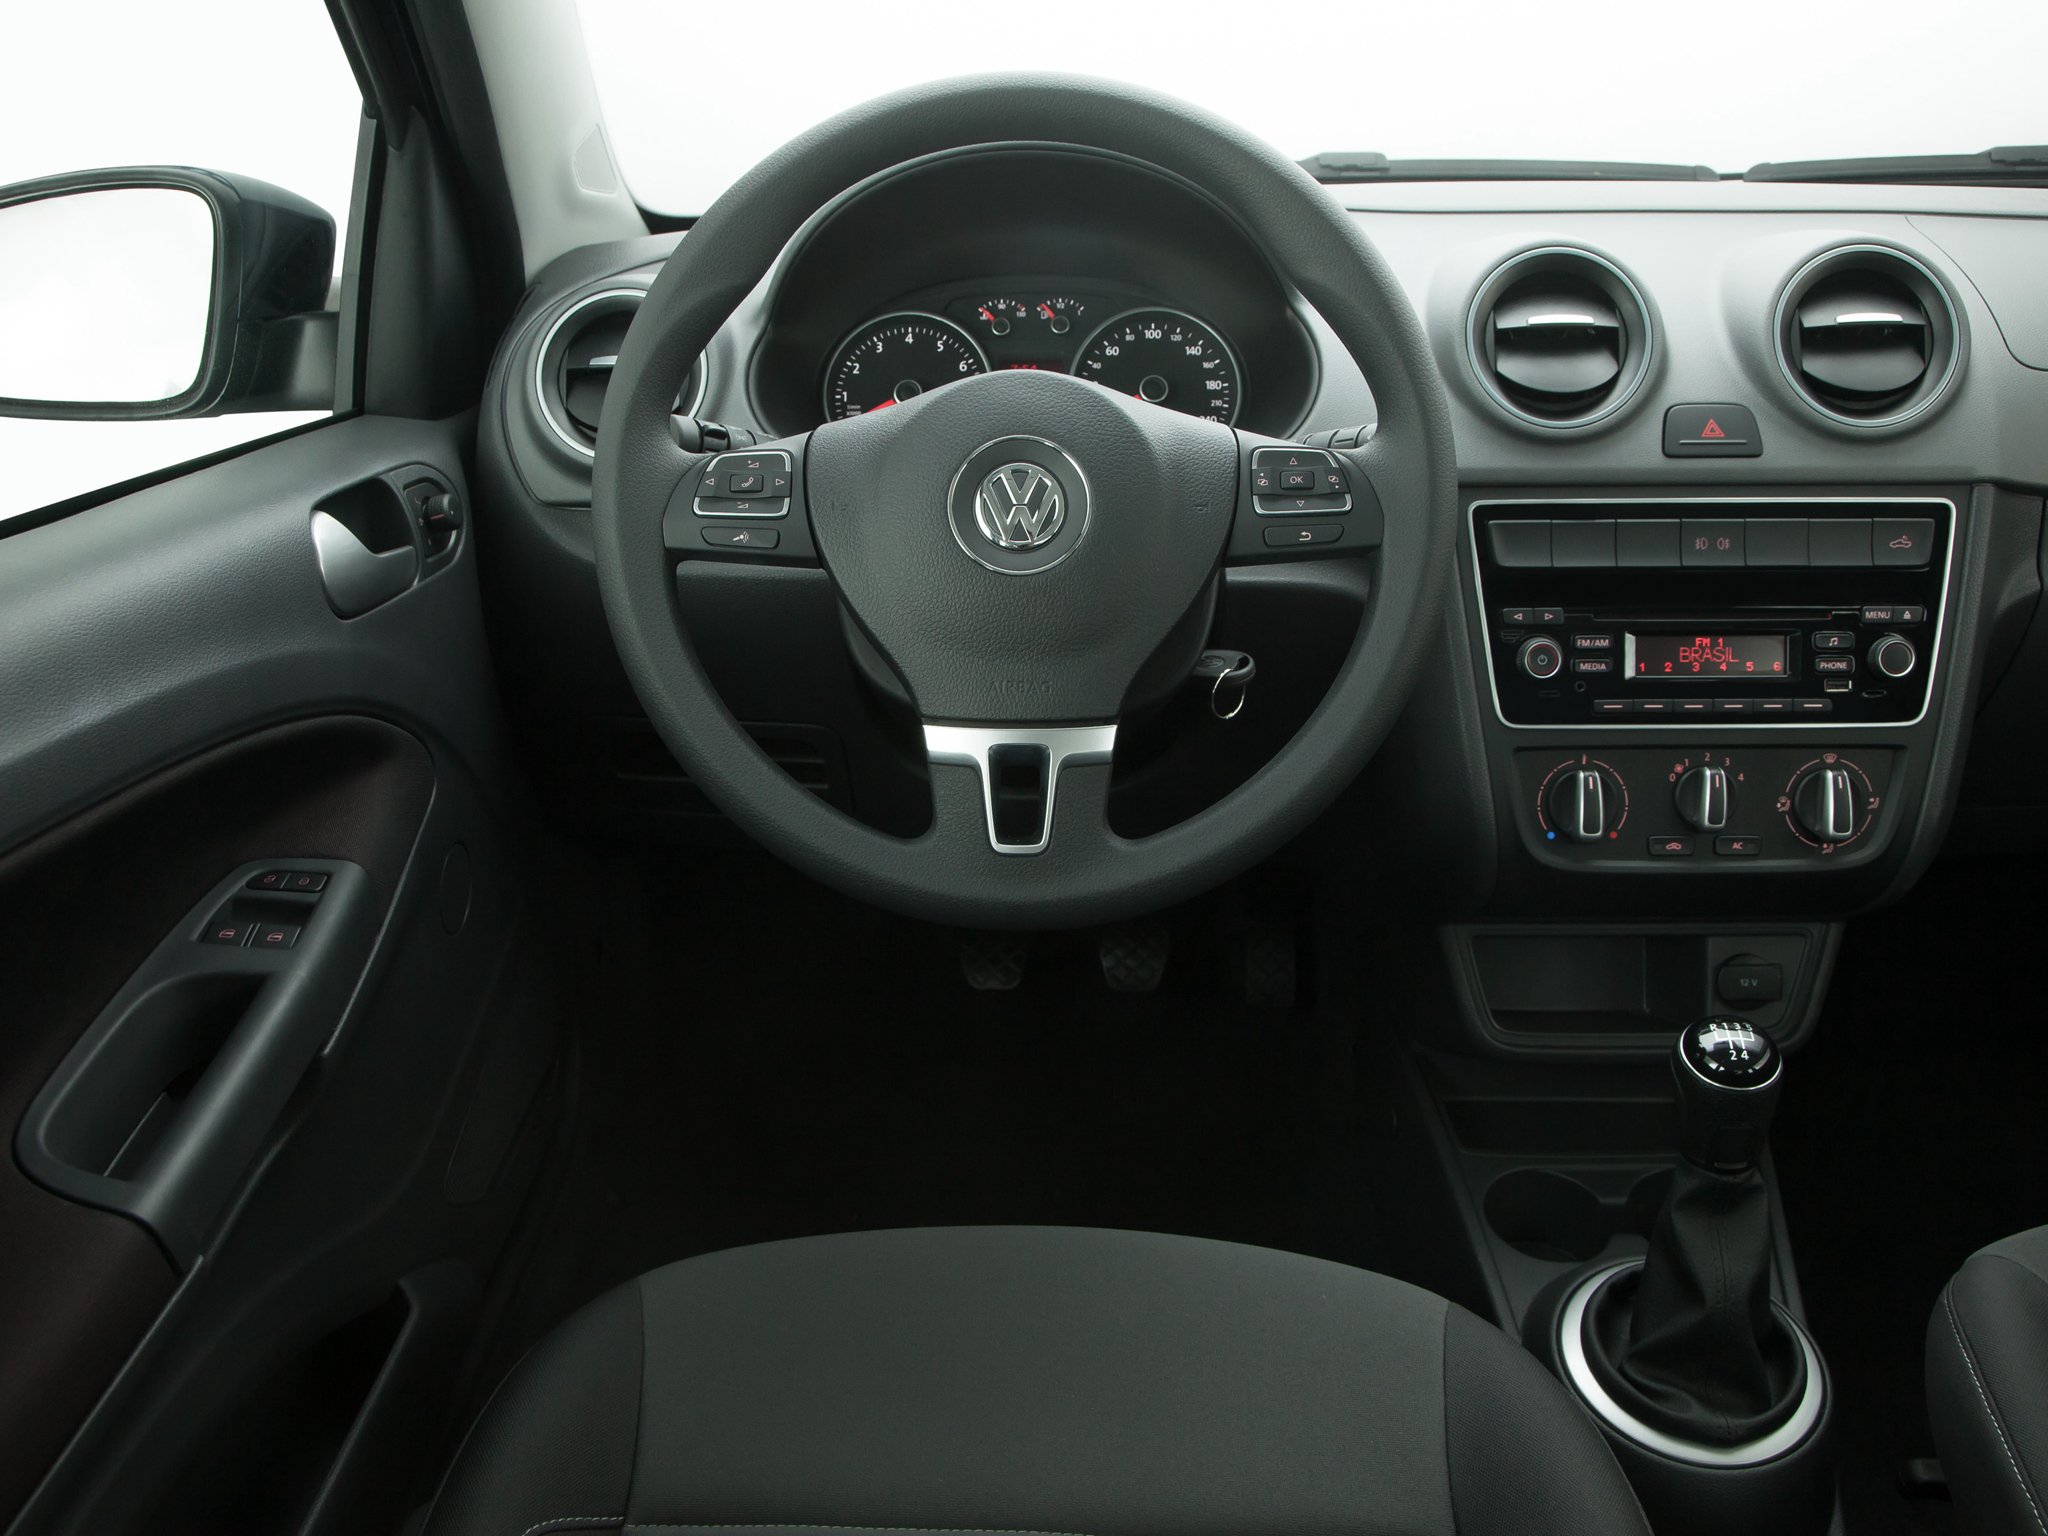 2014 Volkswagen Saveiro Cross Pickup Gets Crew Cab Version in Brazil -  autoevolution